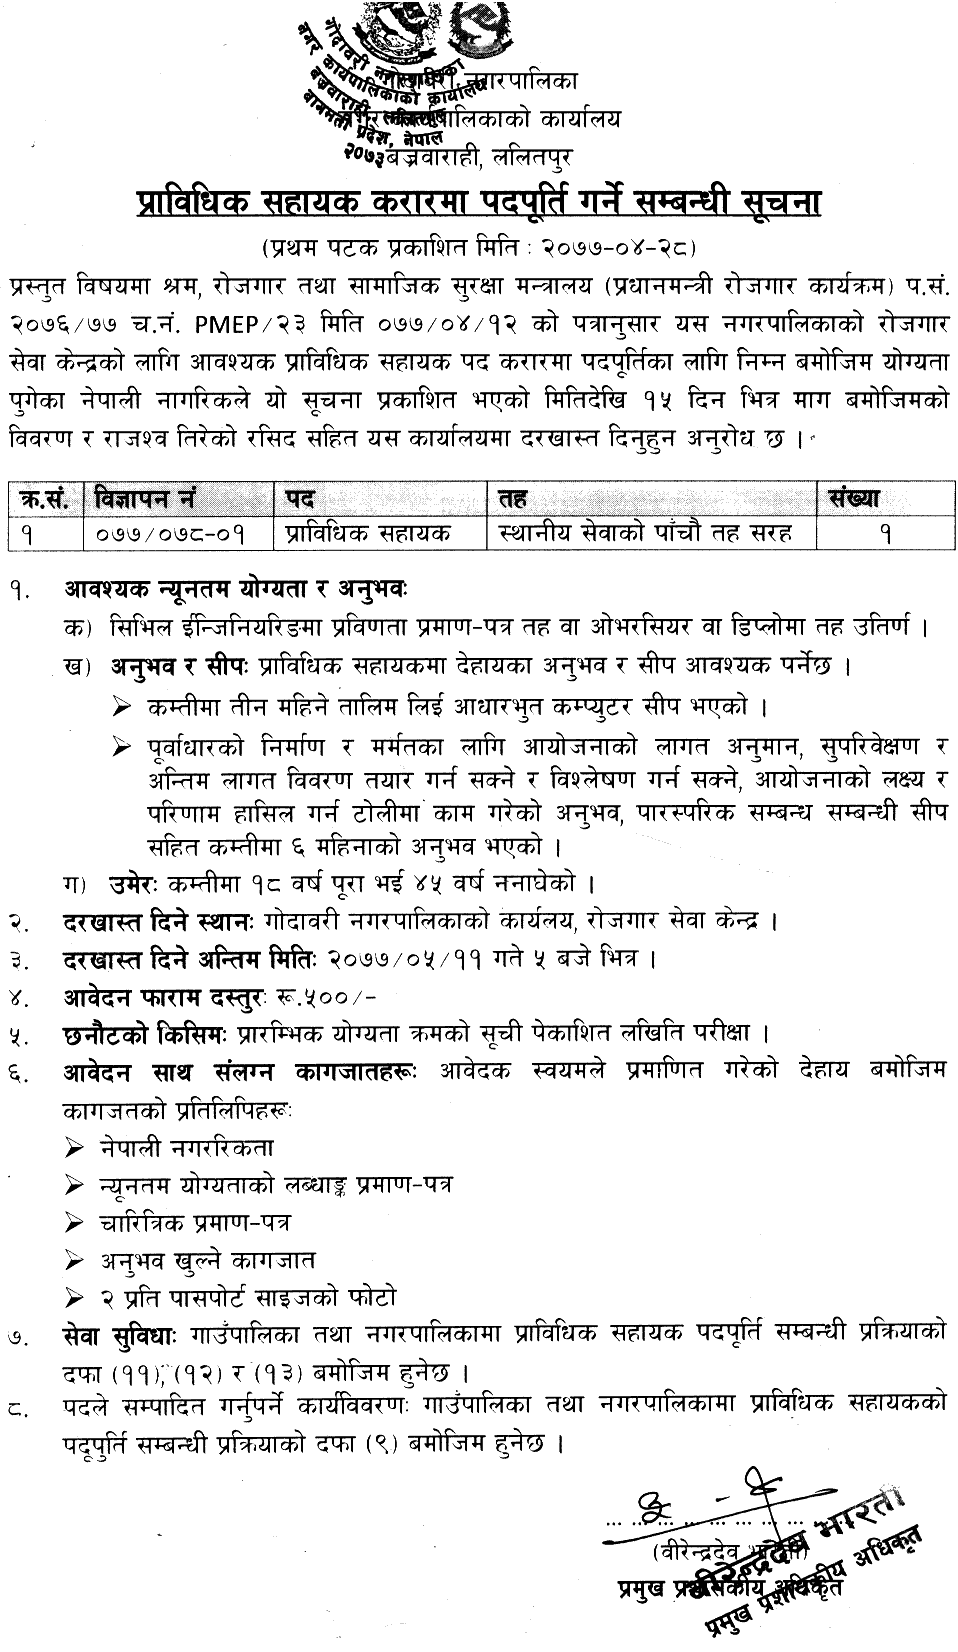 Godawari Municipality Lalitpur Vacancy for Technical Assistant